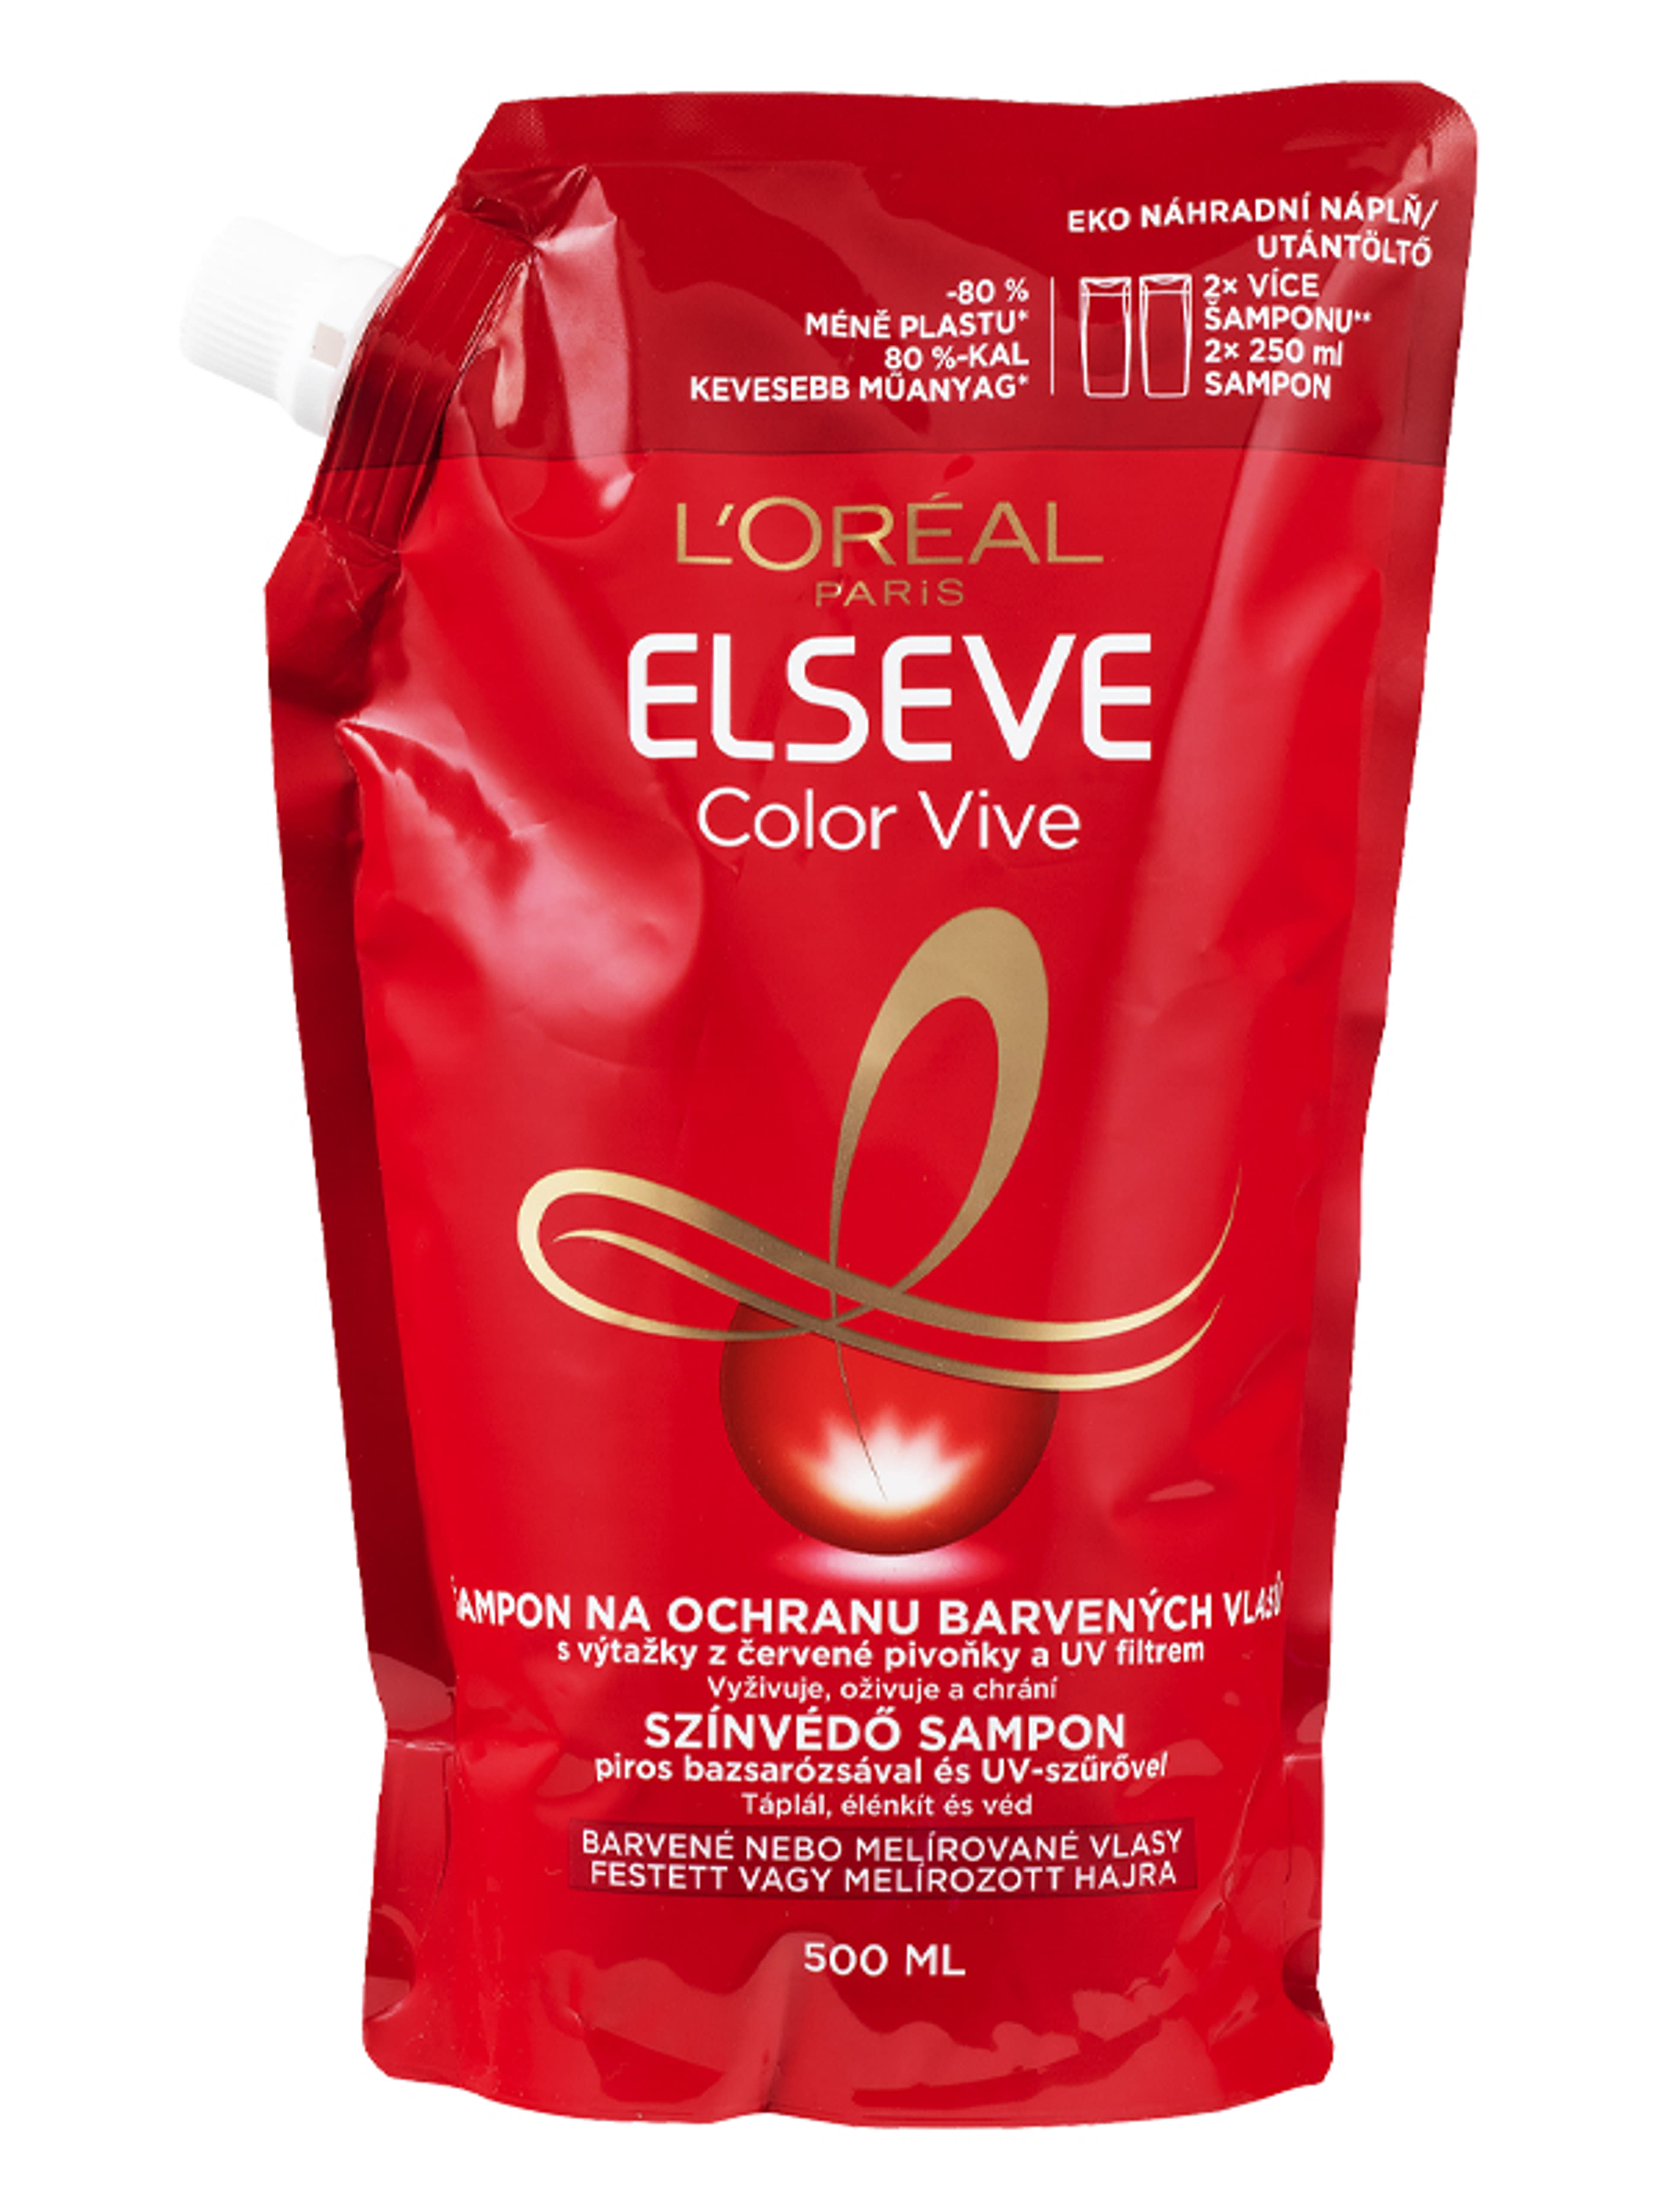 Elseve color vive utántöltő sampon - 500 ml-2